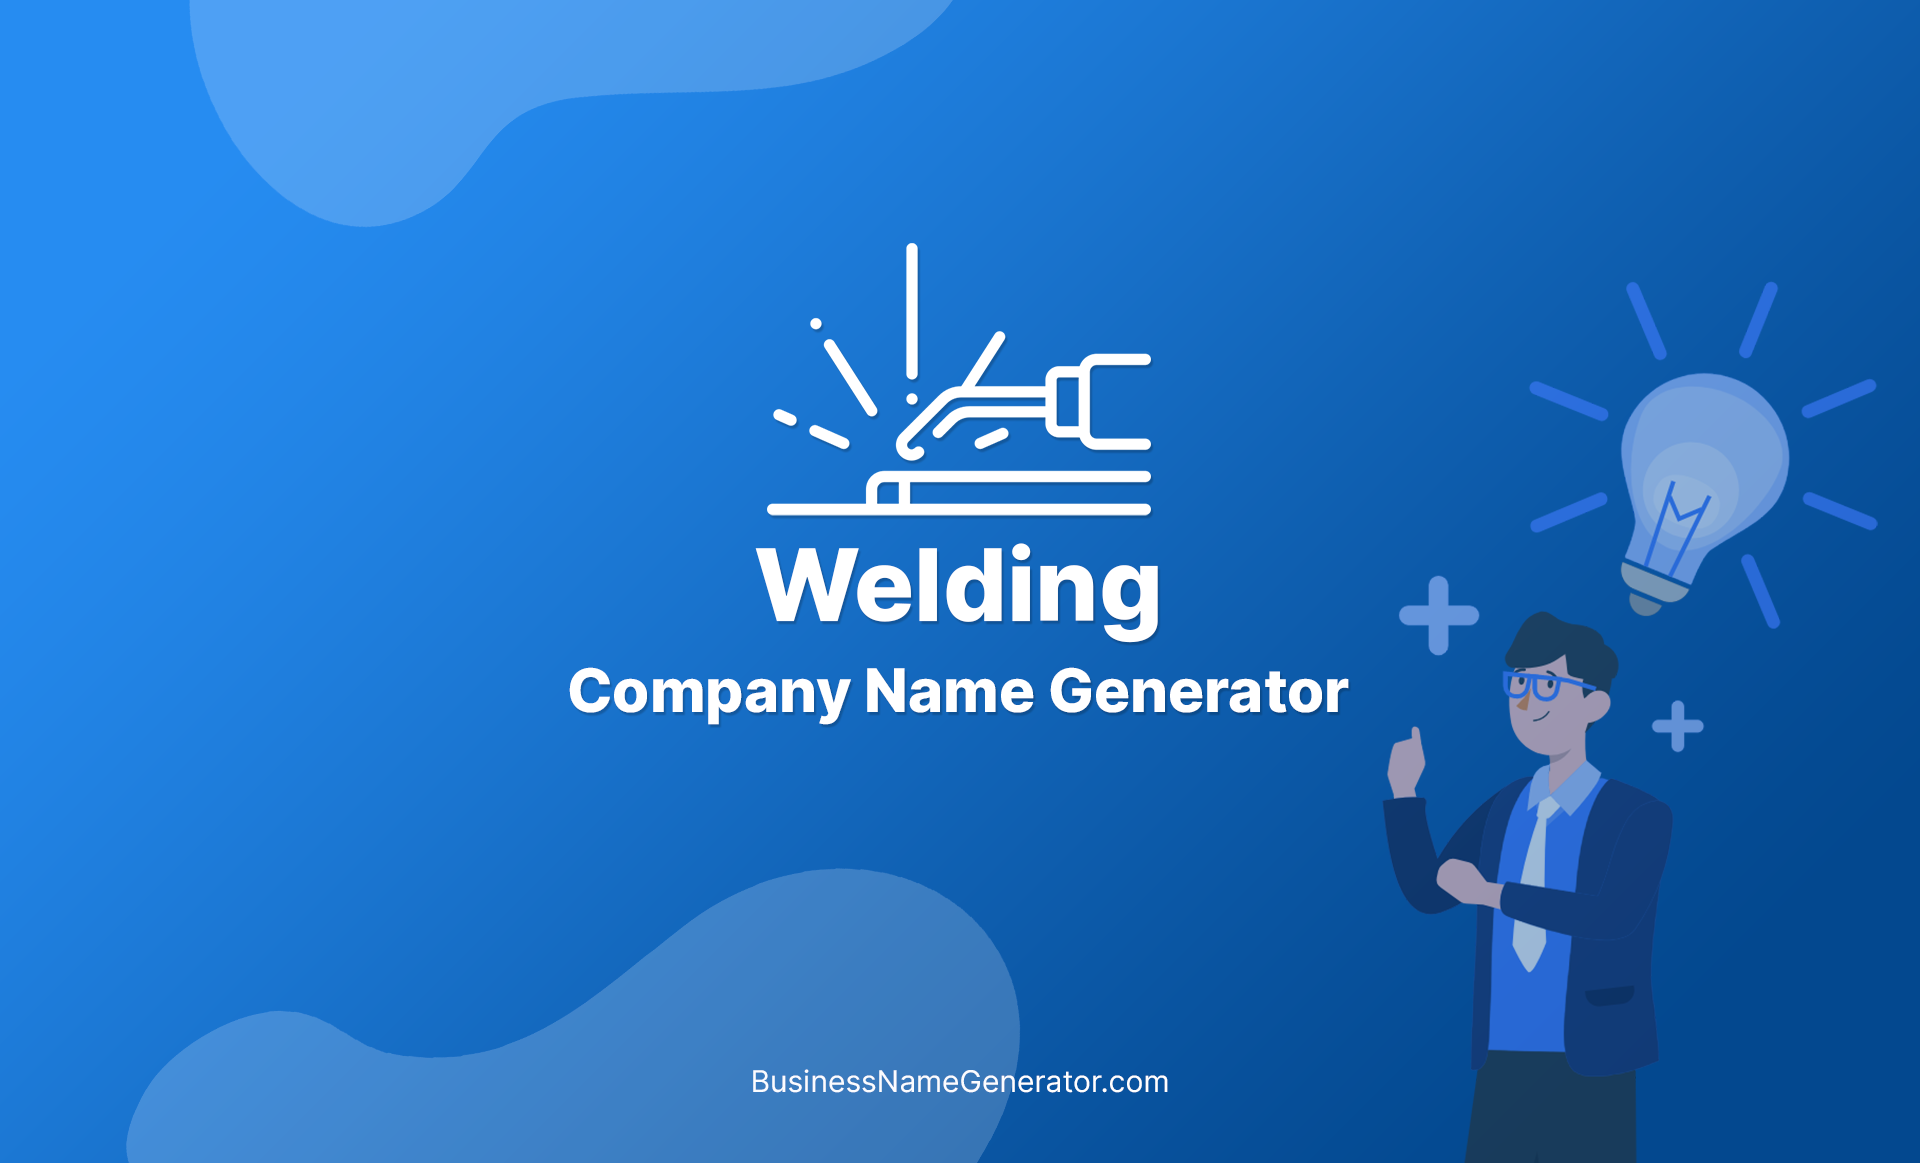 Welding Company Name Generator